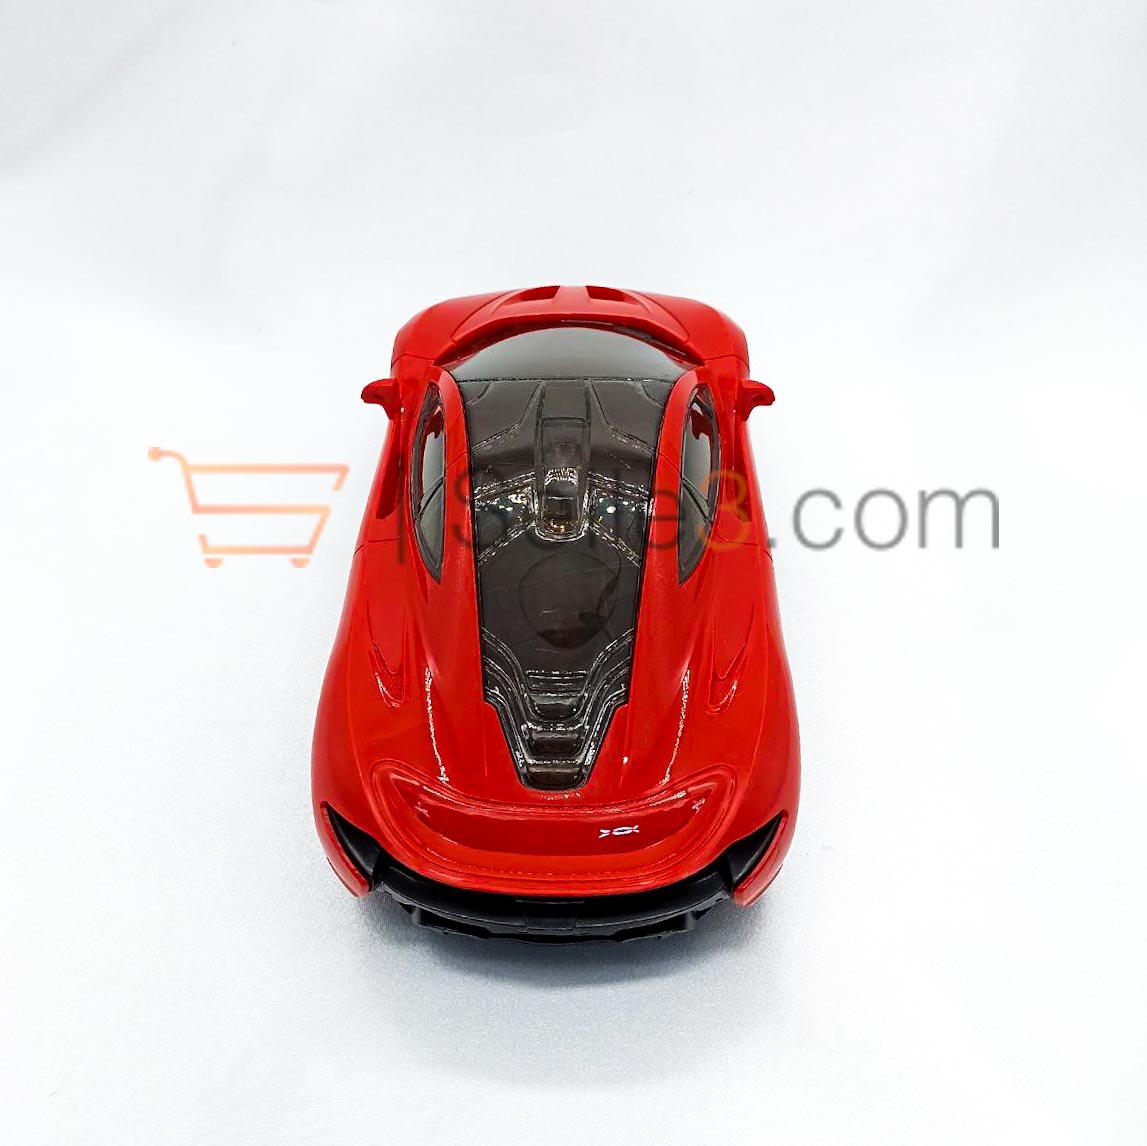 سيارة مكلارن Mclaren Miniature Model Car Toy